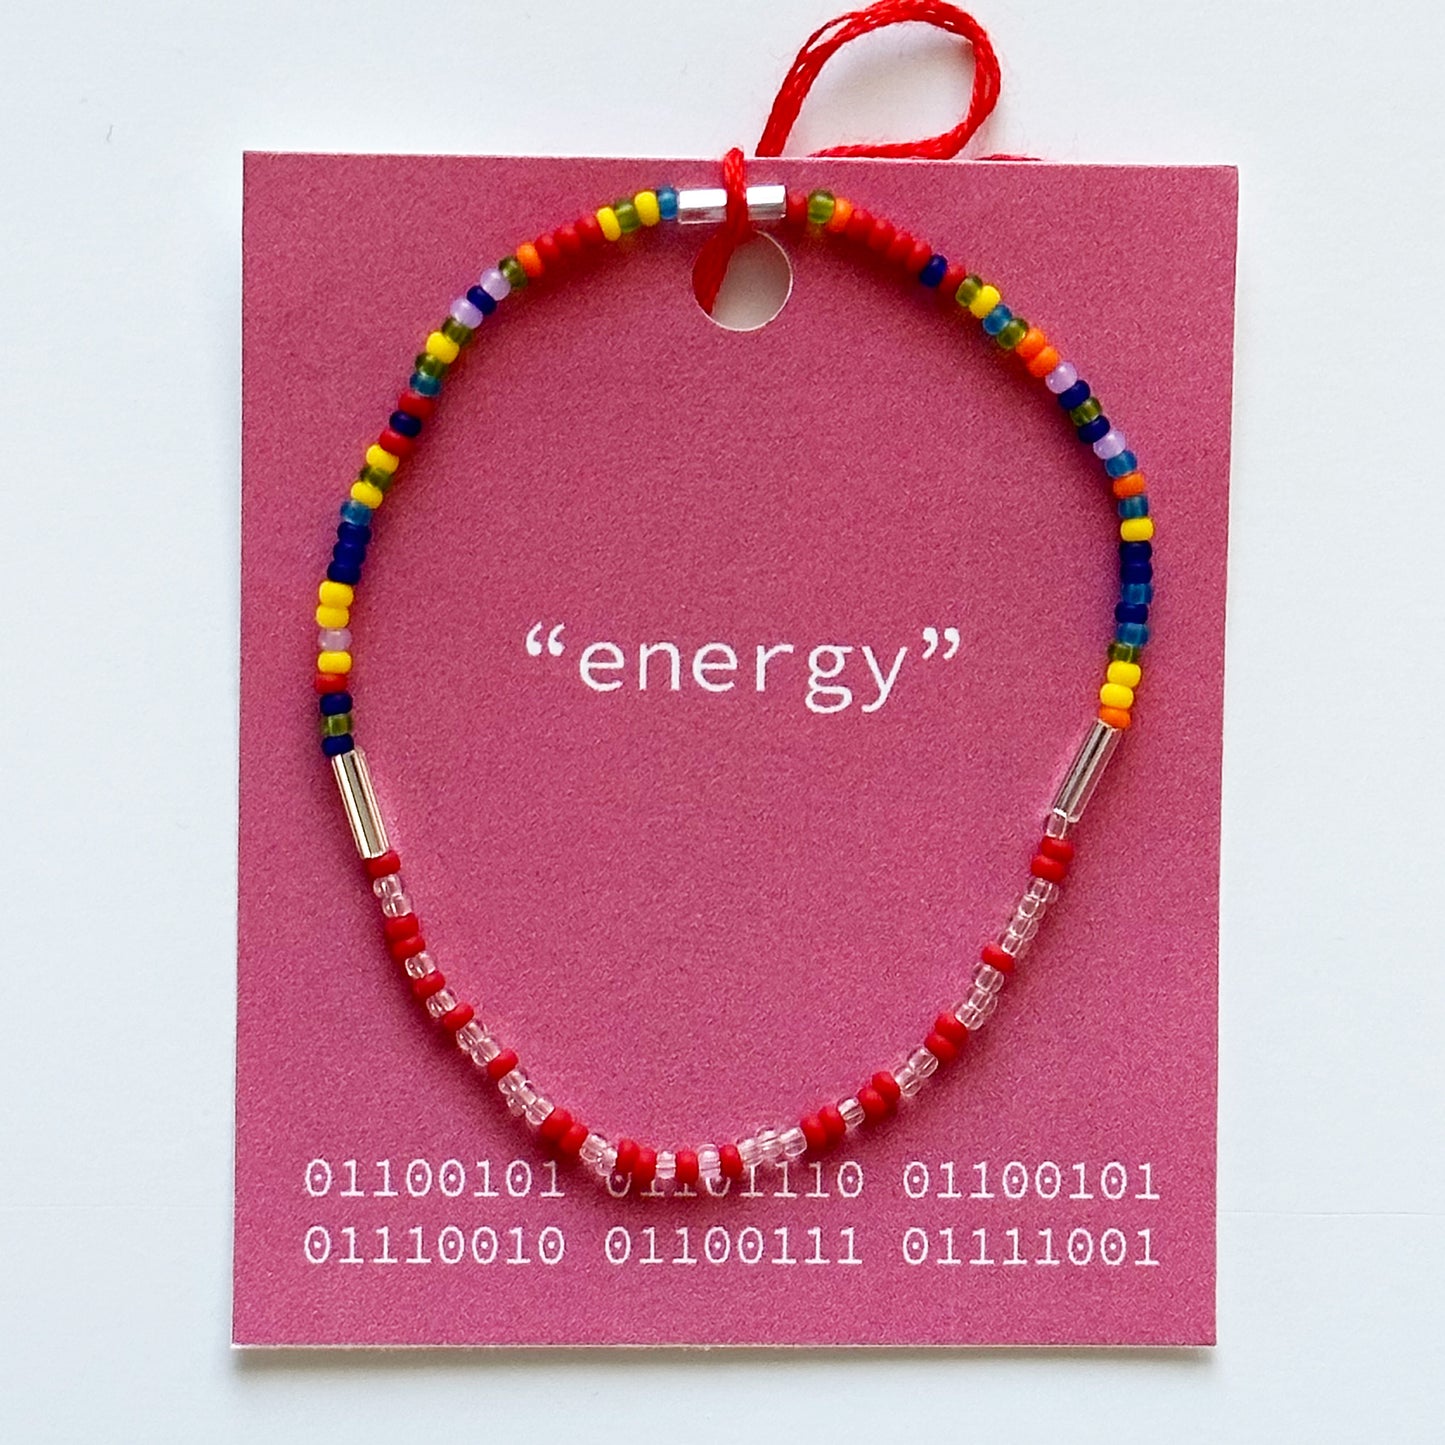 Energy Binary Code Bracelet